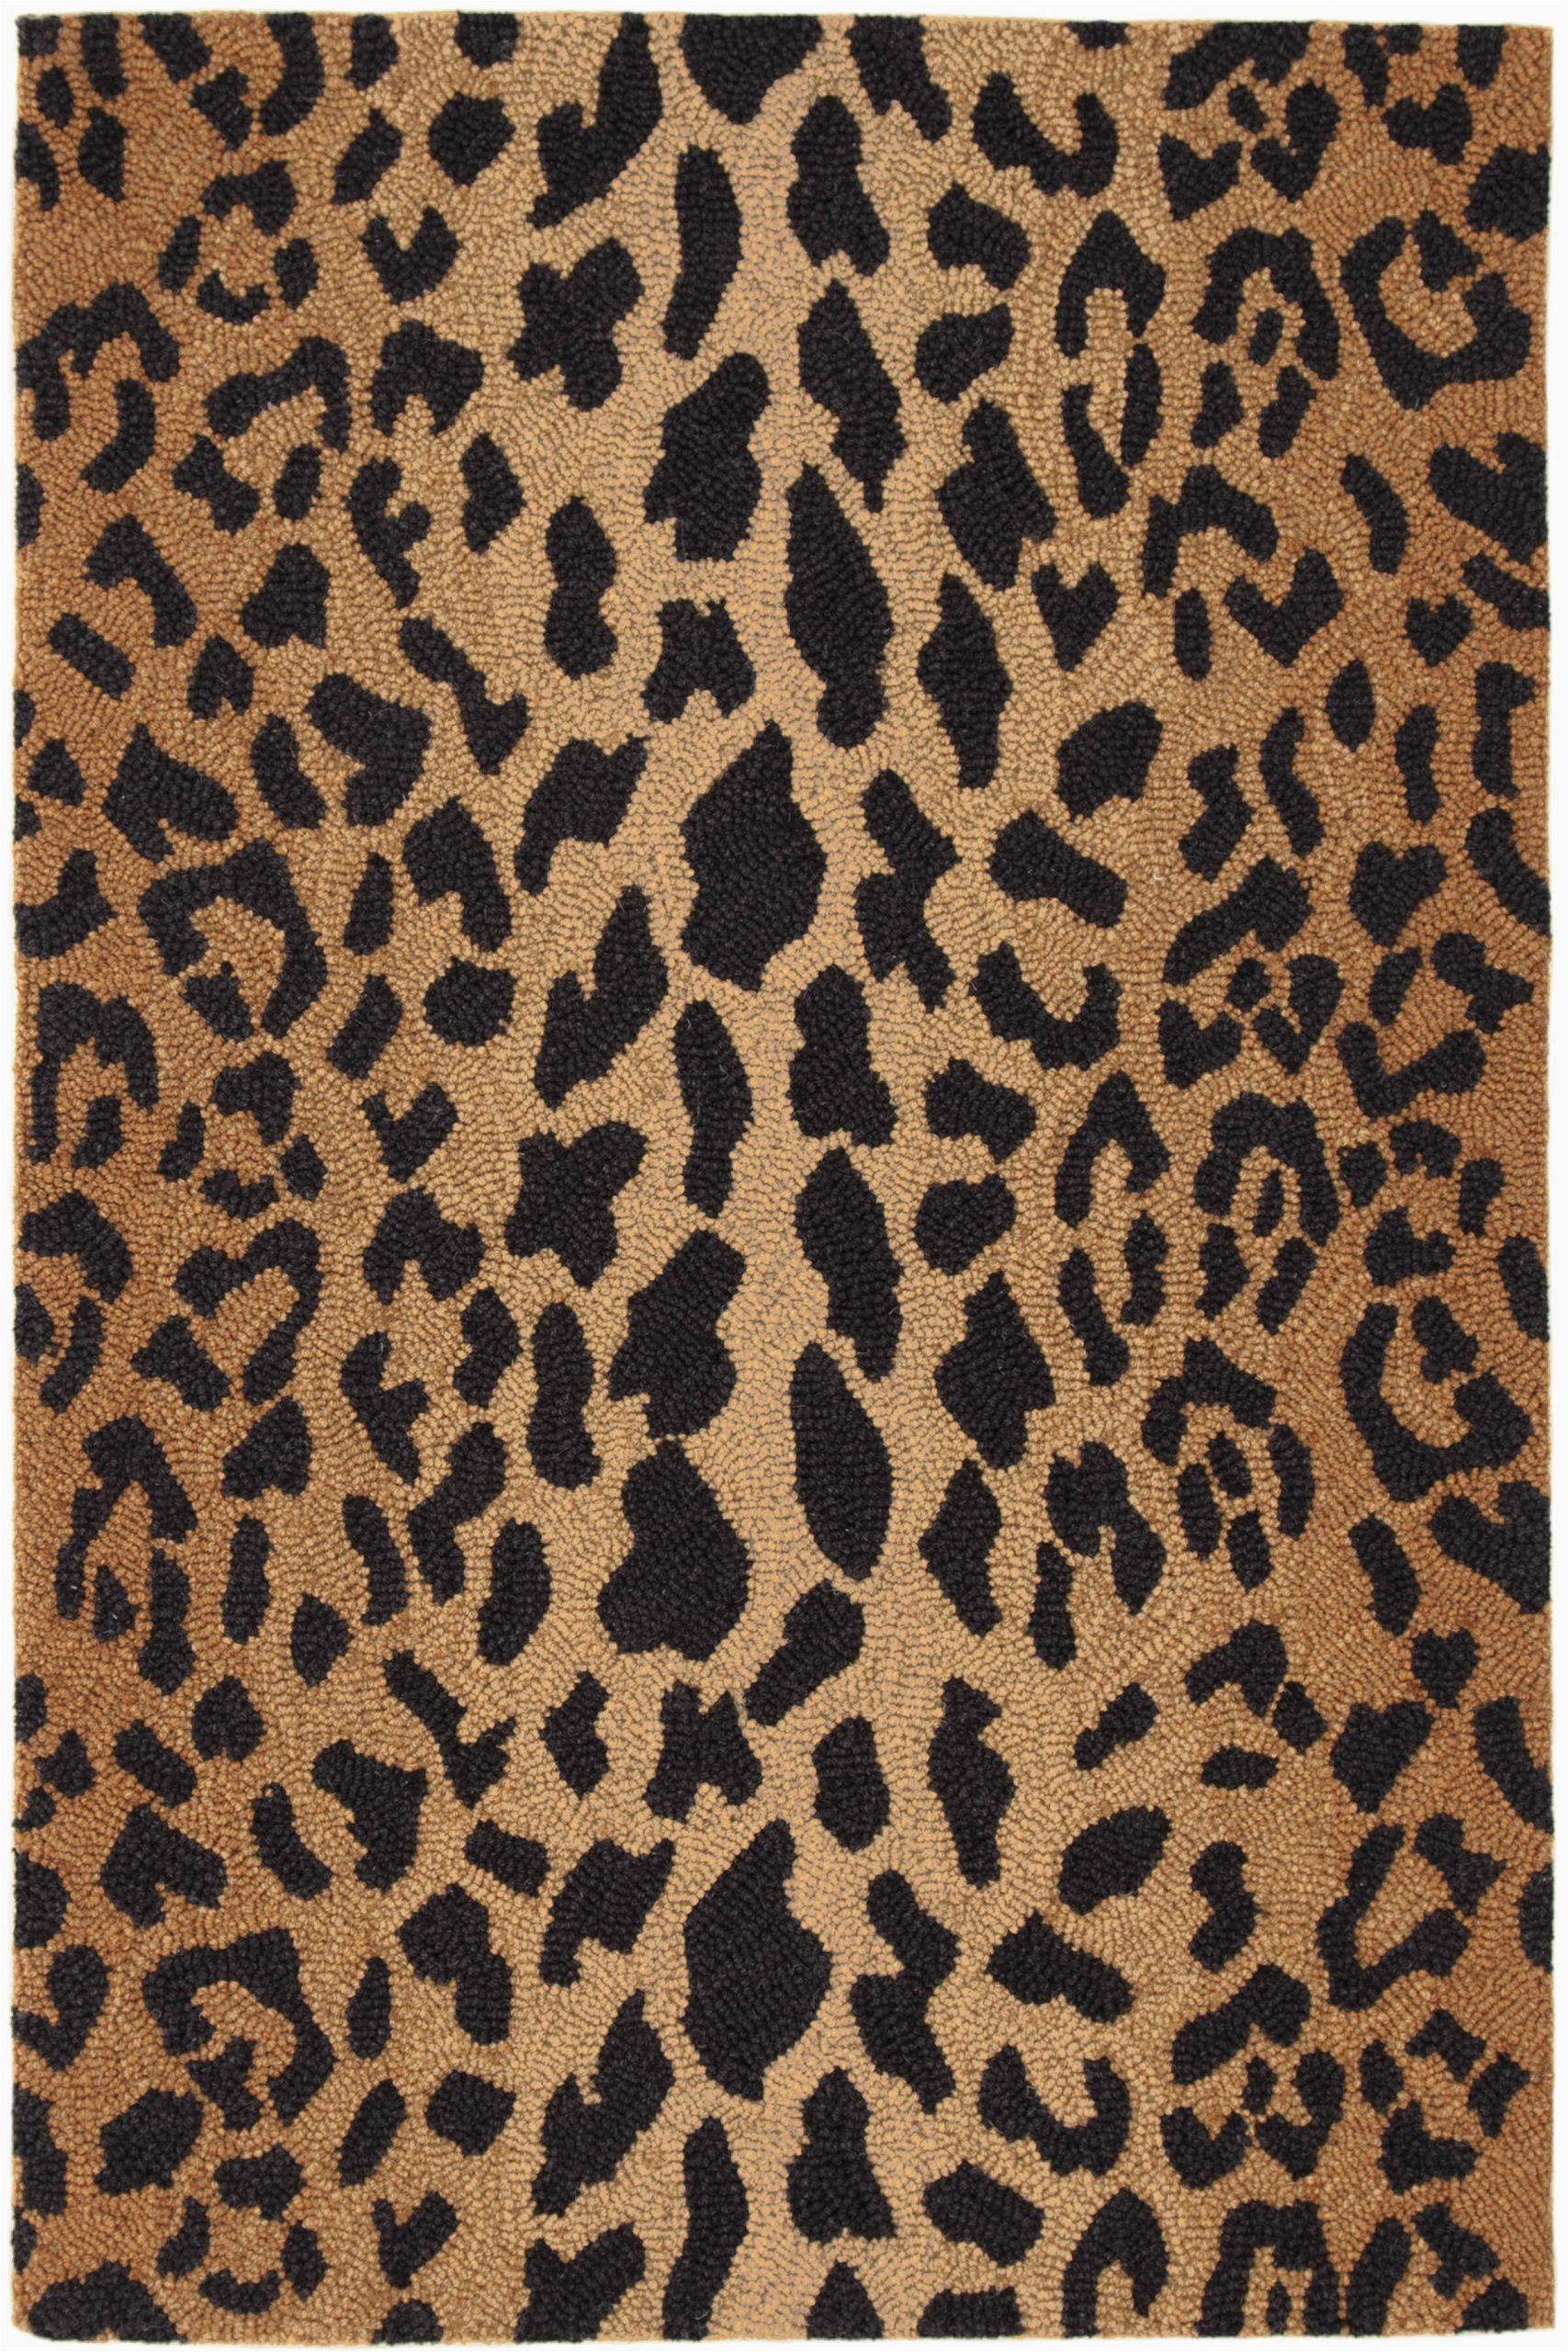 Animal Print Bath Rugs Leopard Animal Print Hand Hooked Wool Brown Black area Rug